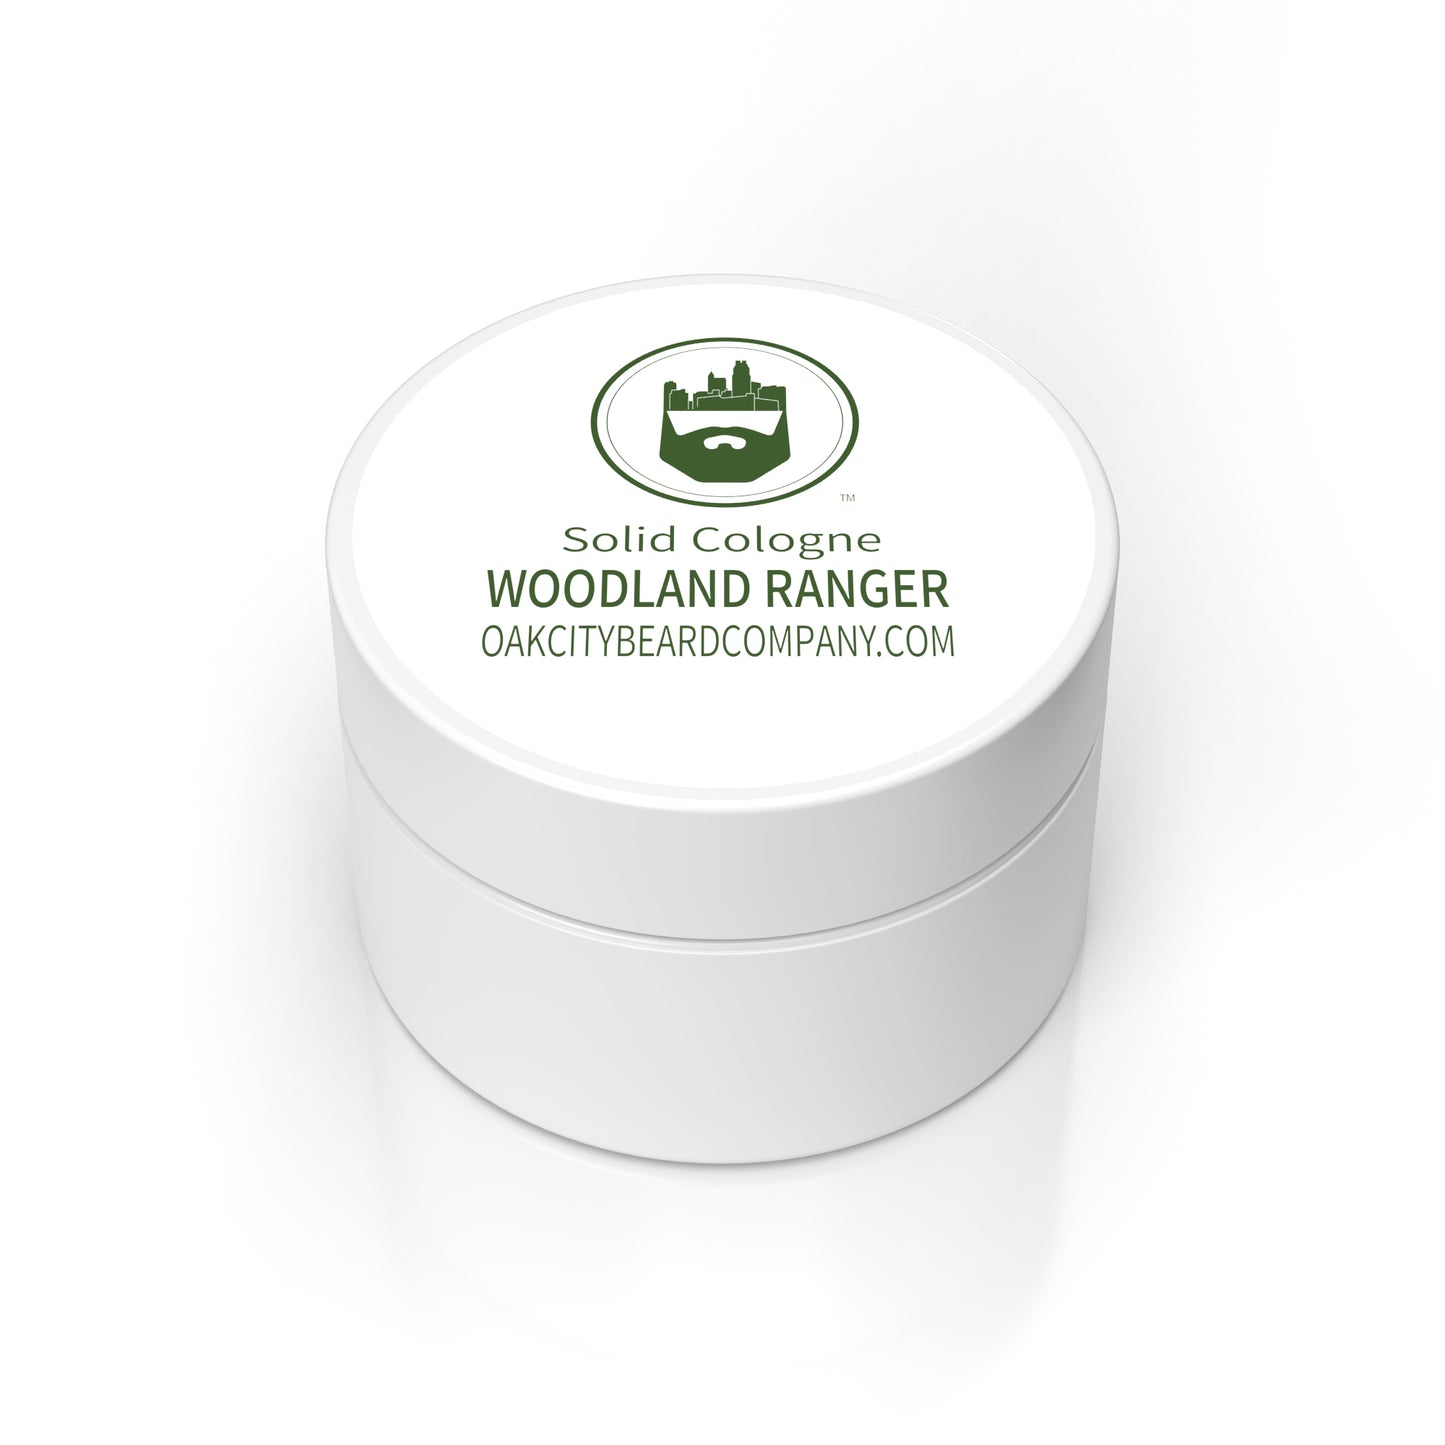 Woodland Ranger (Solid Cologne) by Oak City Beard Company